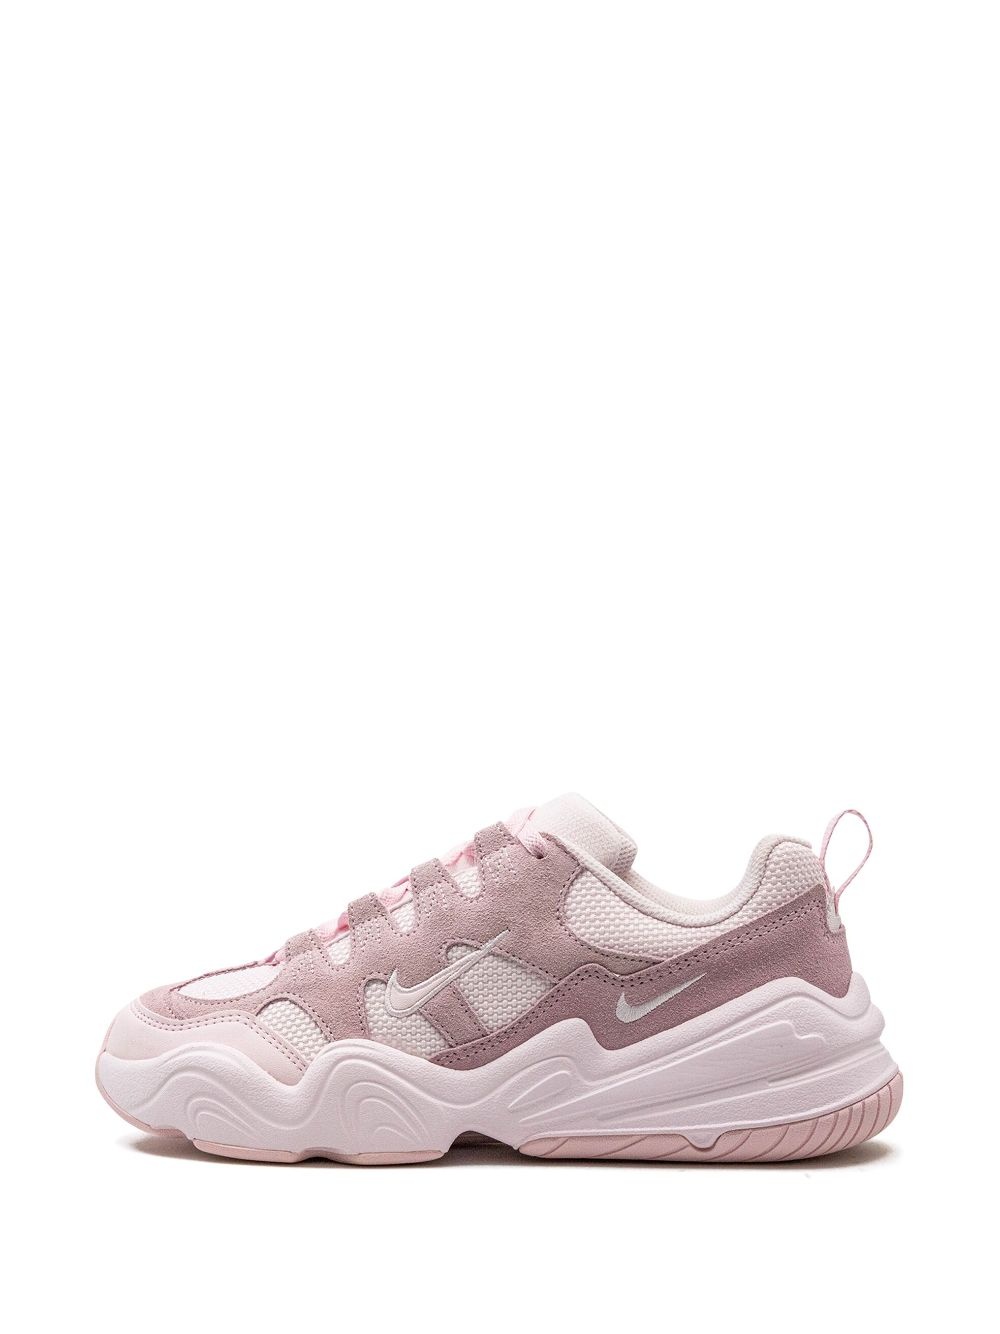 Tech Hera "Pearl Pink" sneakers - 5